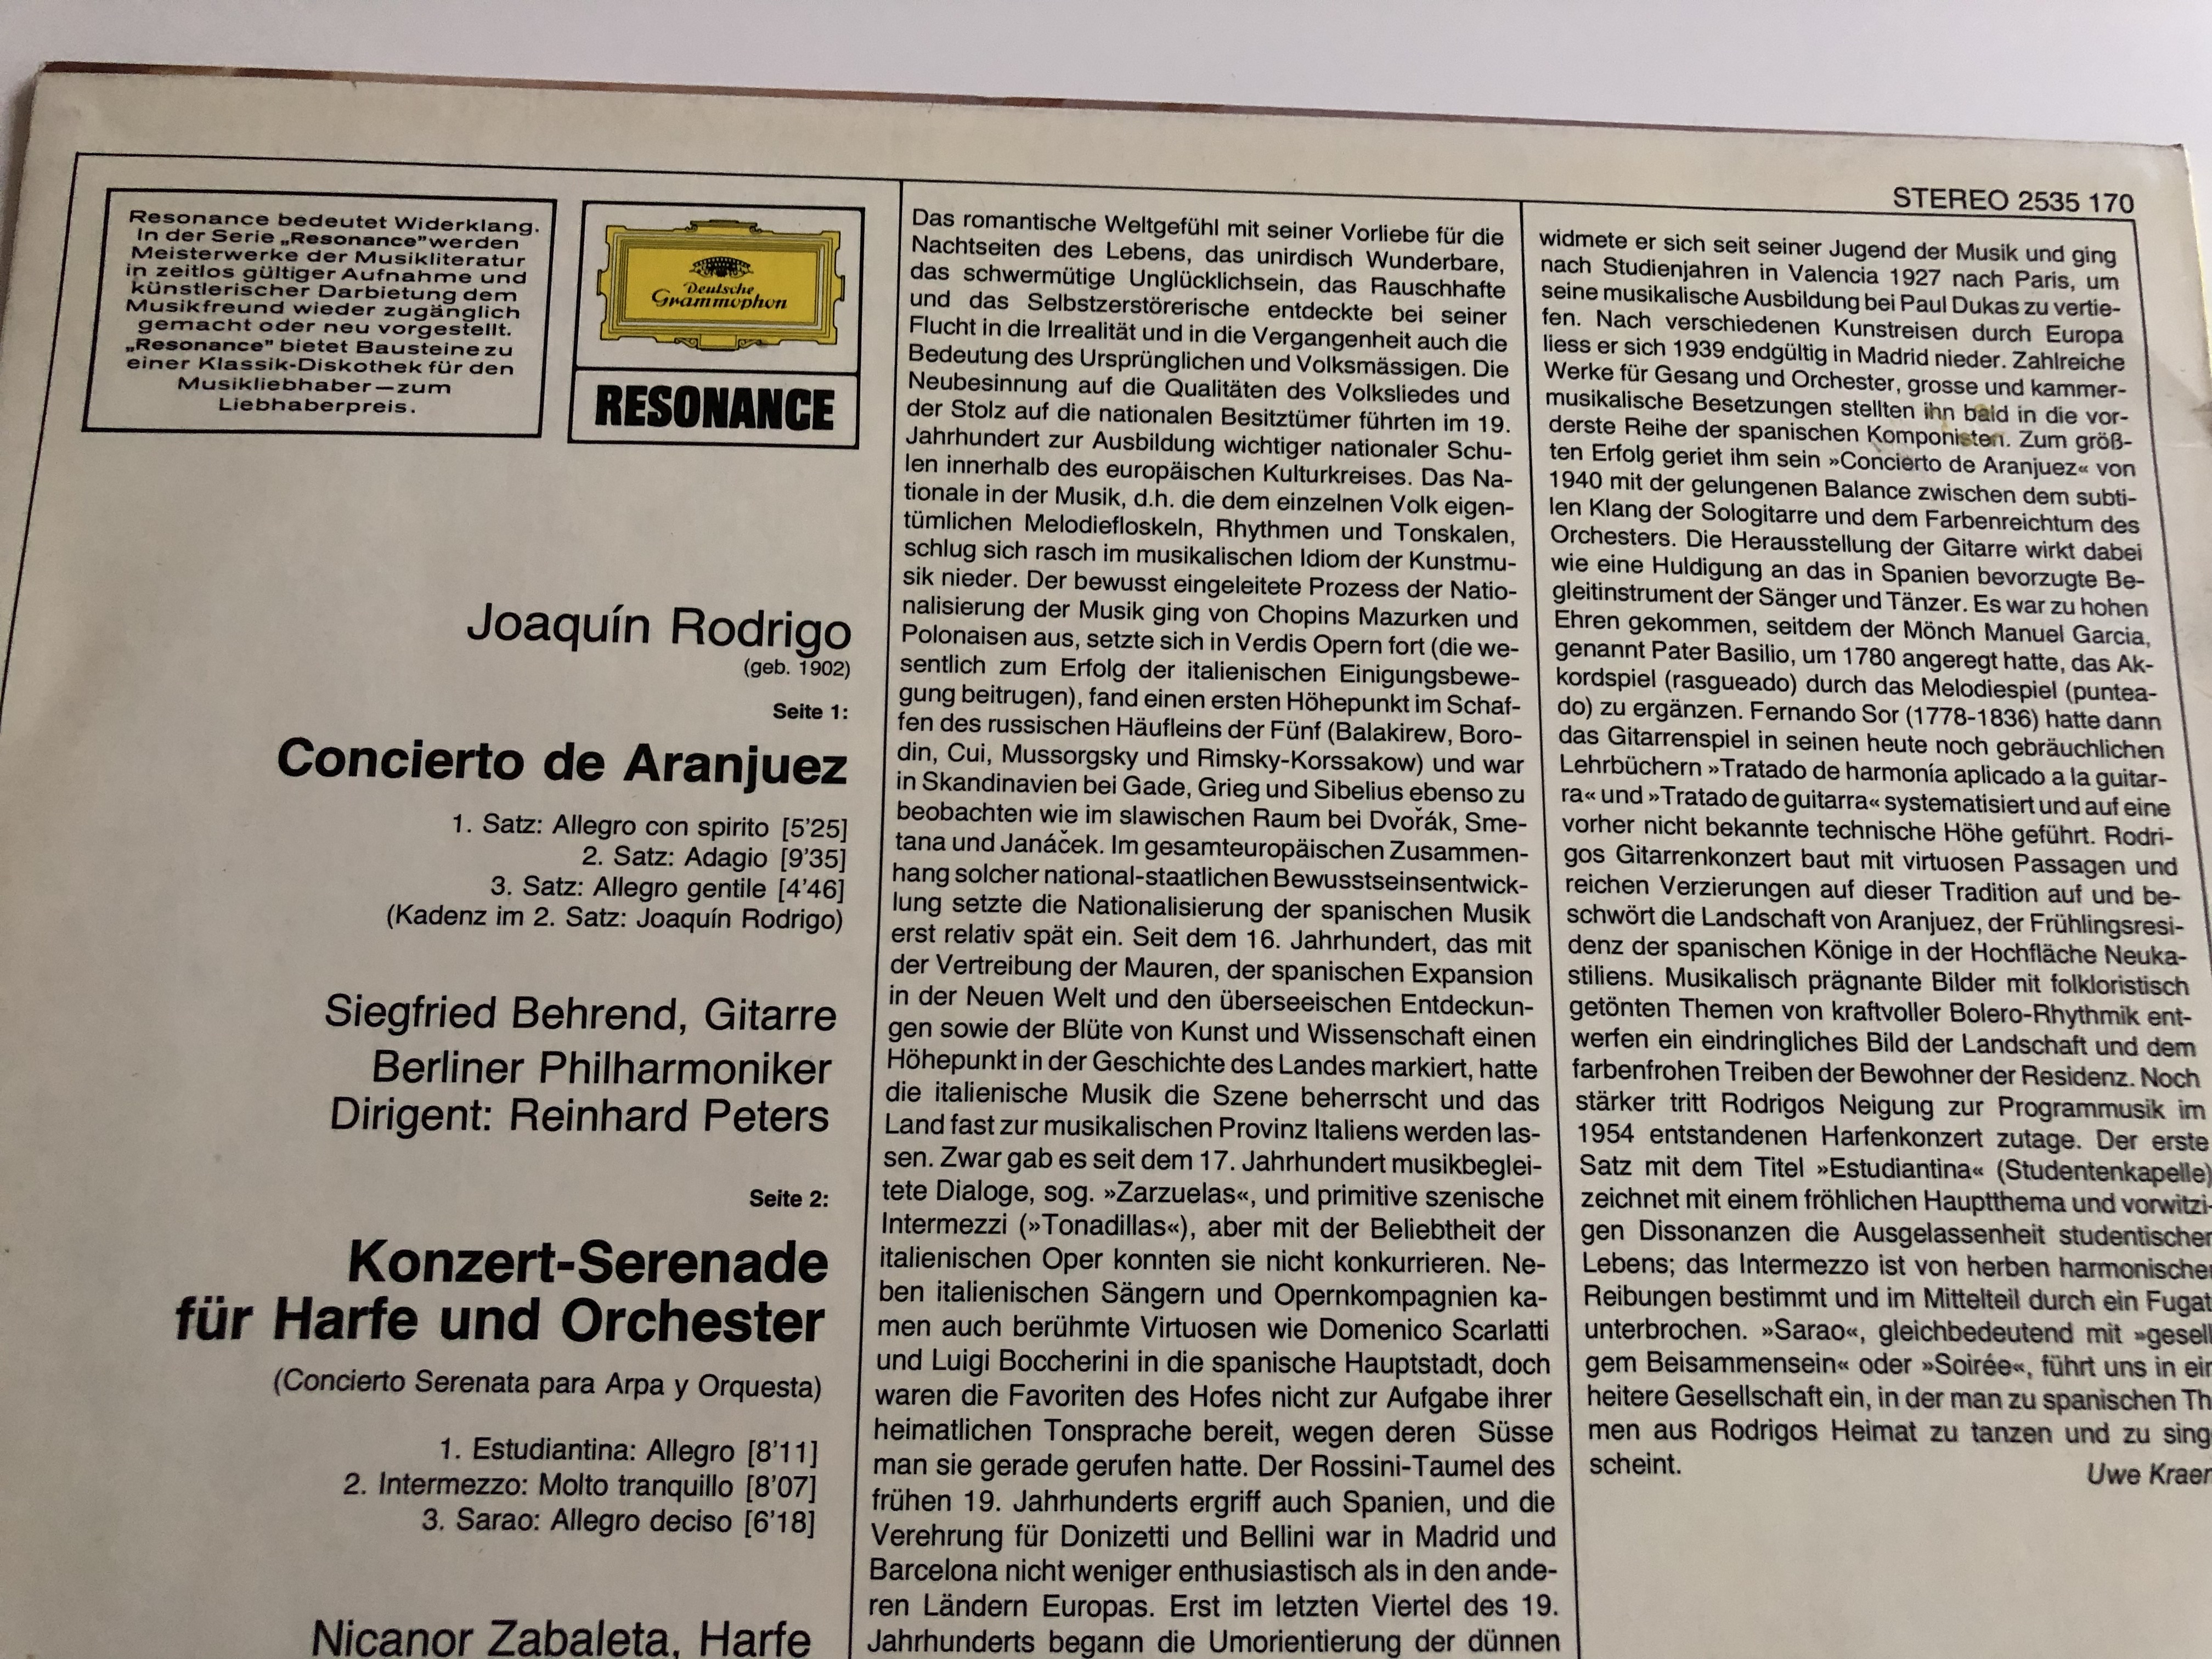 rodrigo-concierto-de-aranjuez-konzertserenade-f-r-harfe-siegfried-behrend-nicanor-zabaleta-deutsche-grammophon-lp-stereo-2535-170-3-.jpg